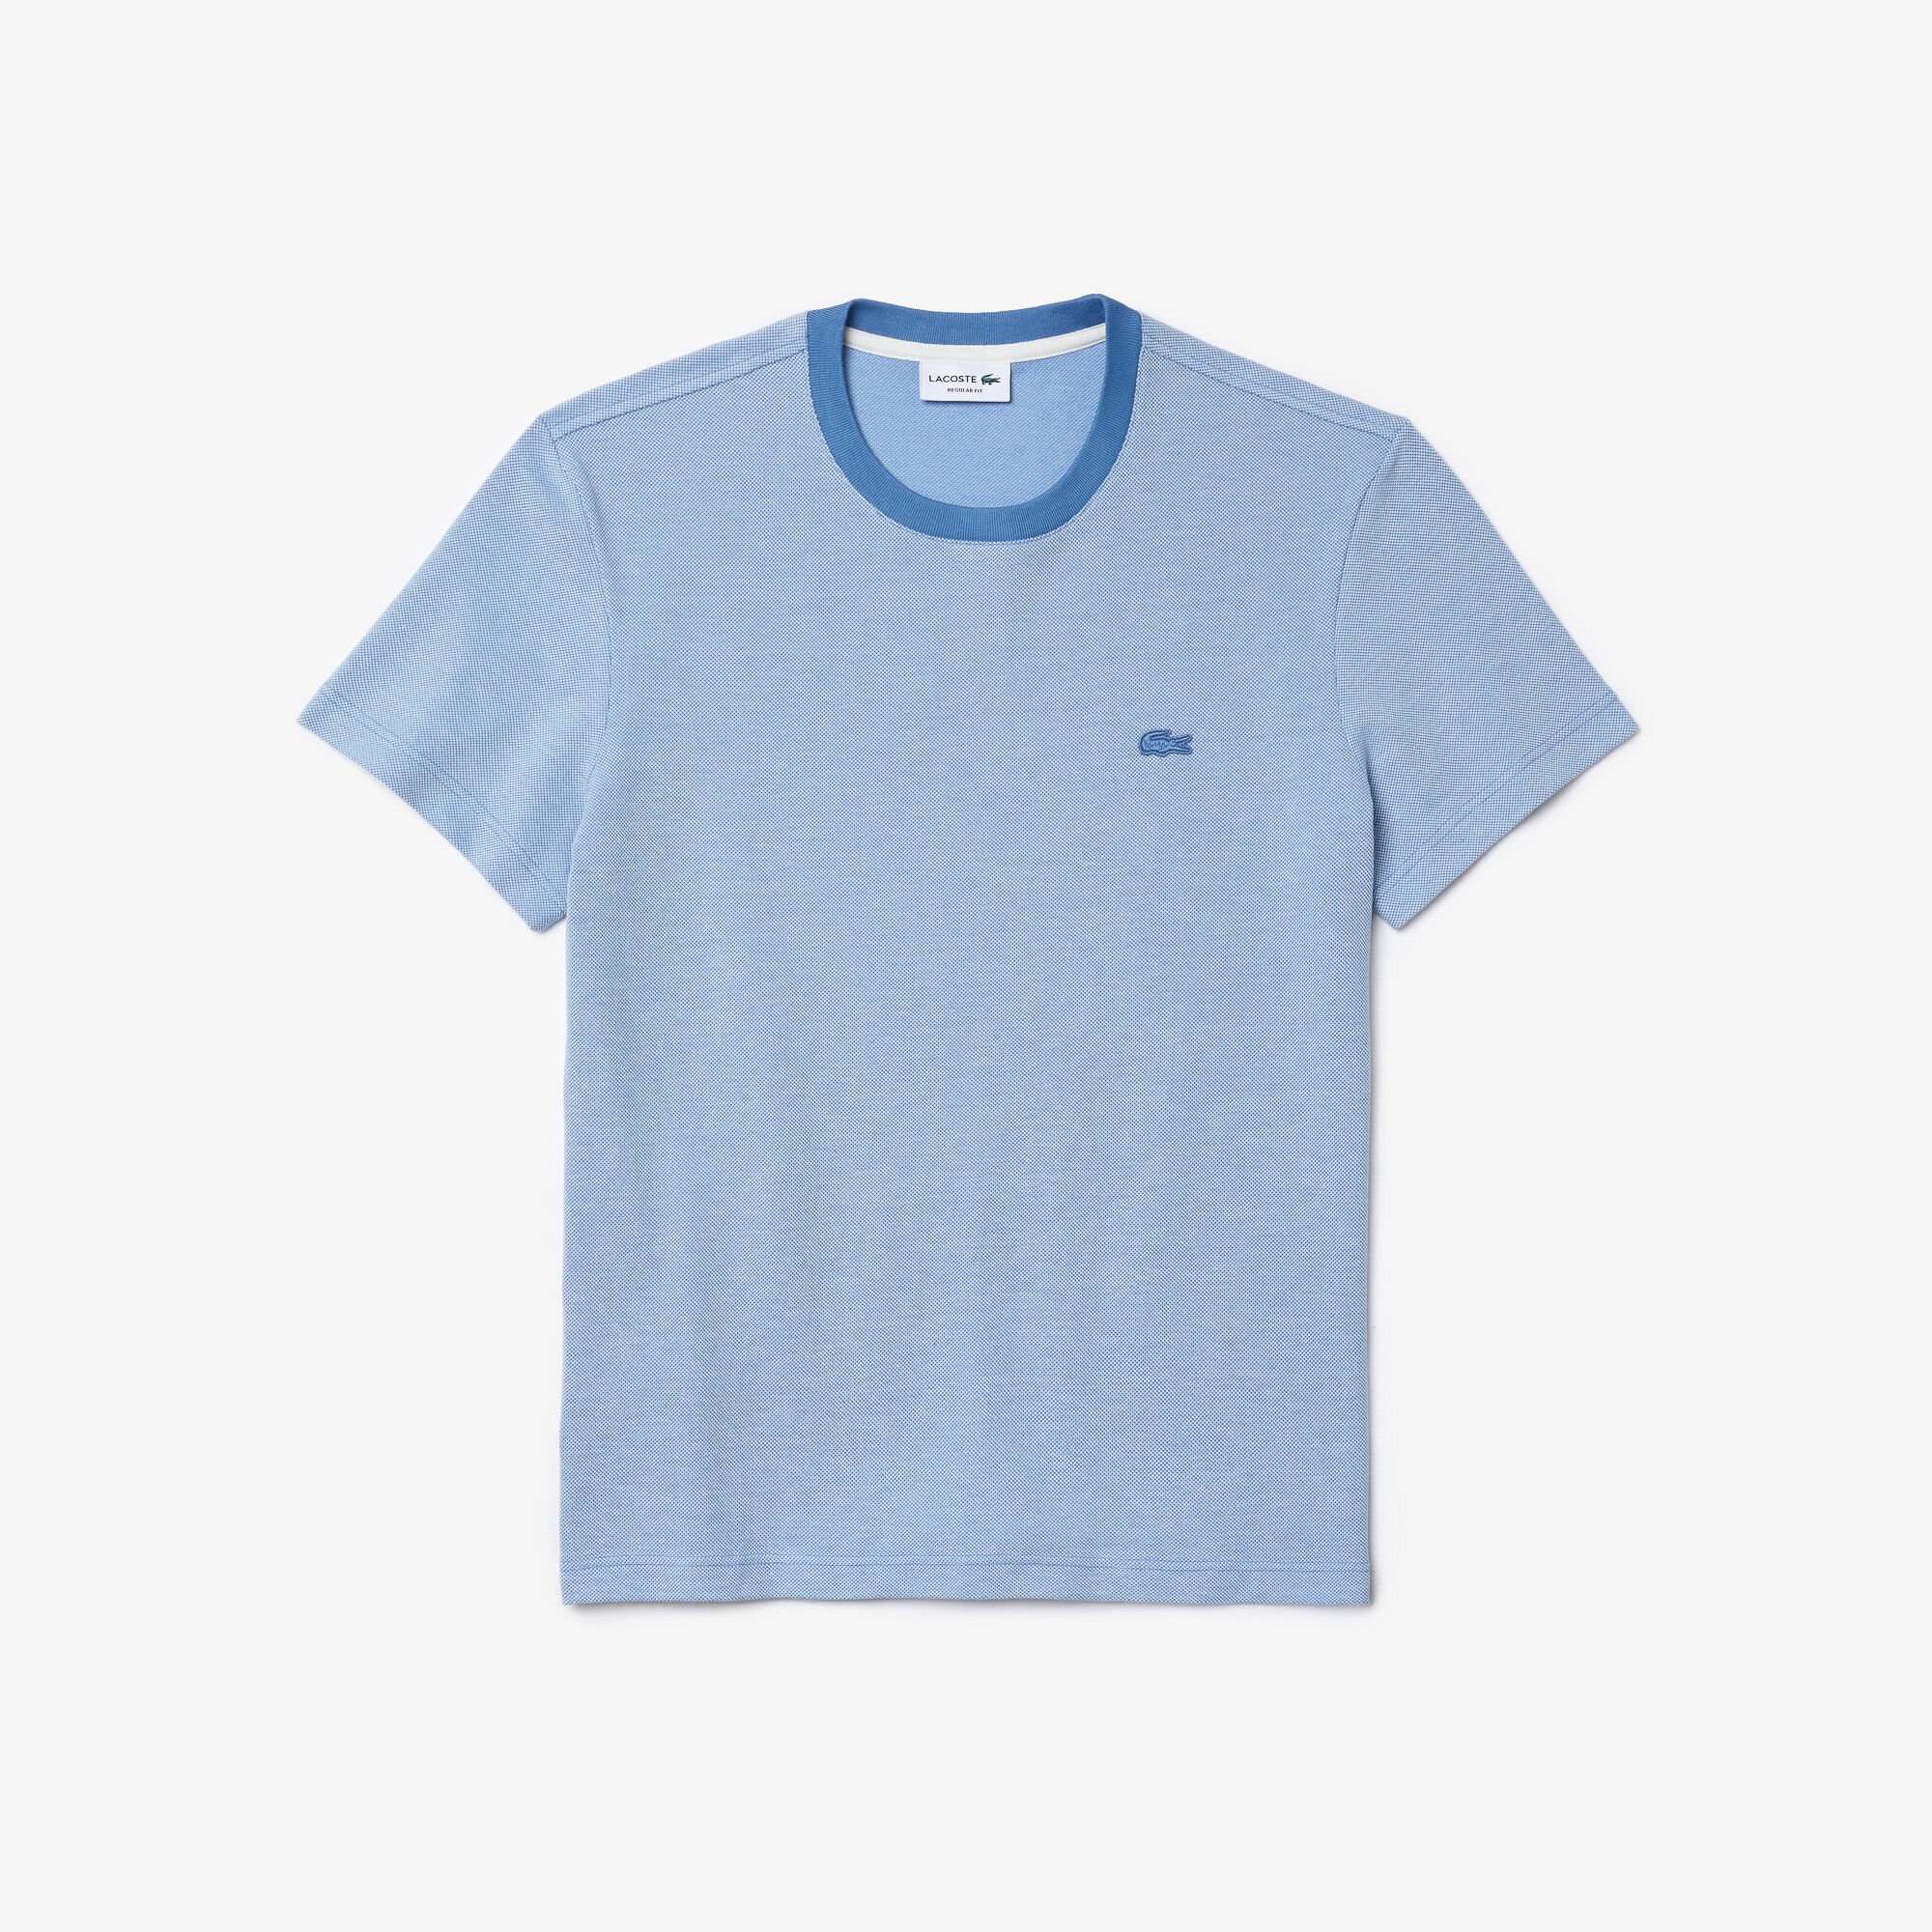 Men’s Crew Neck Textured Cotton T-shirt